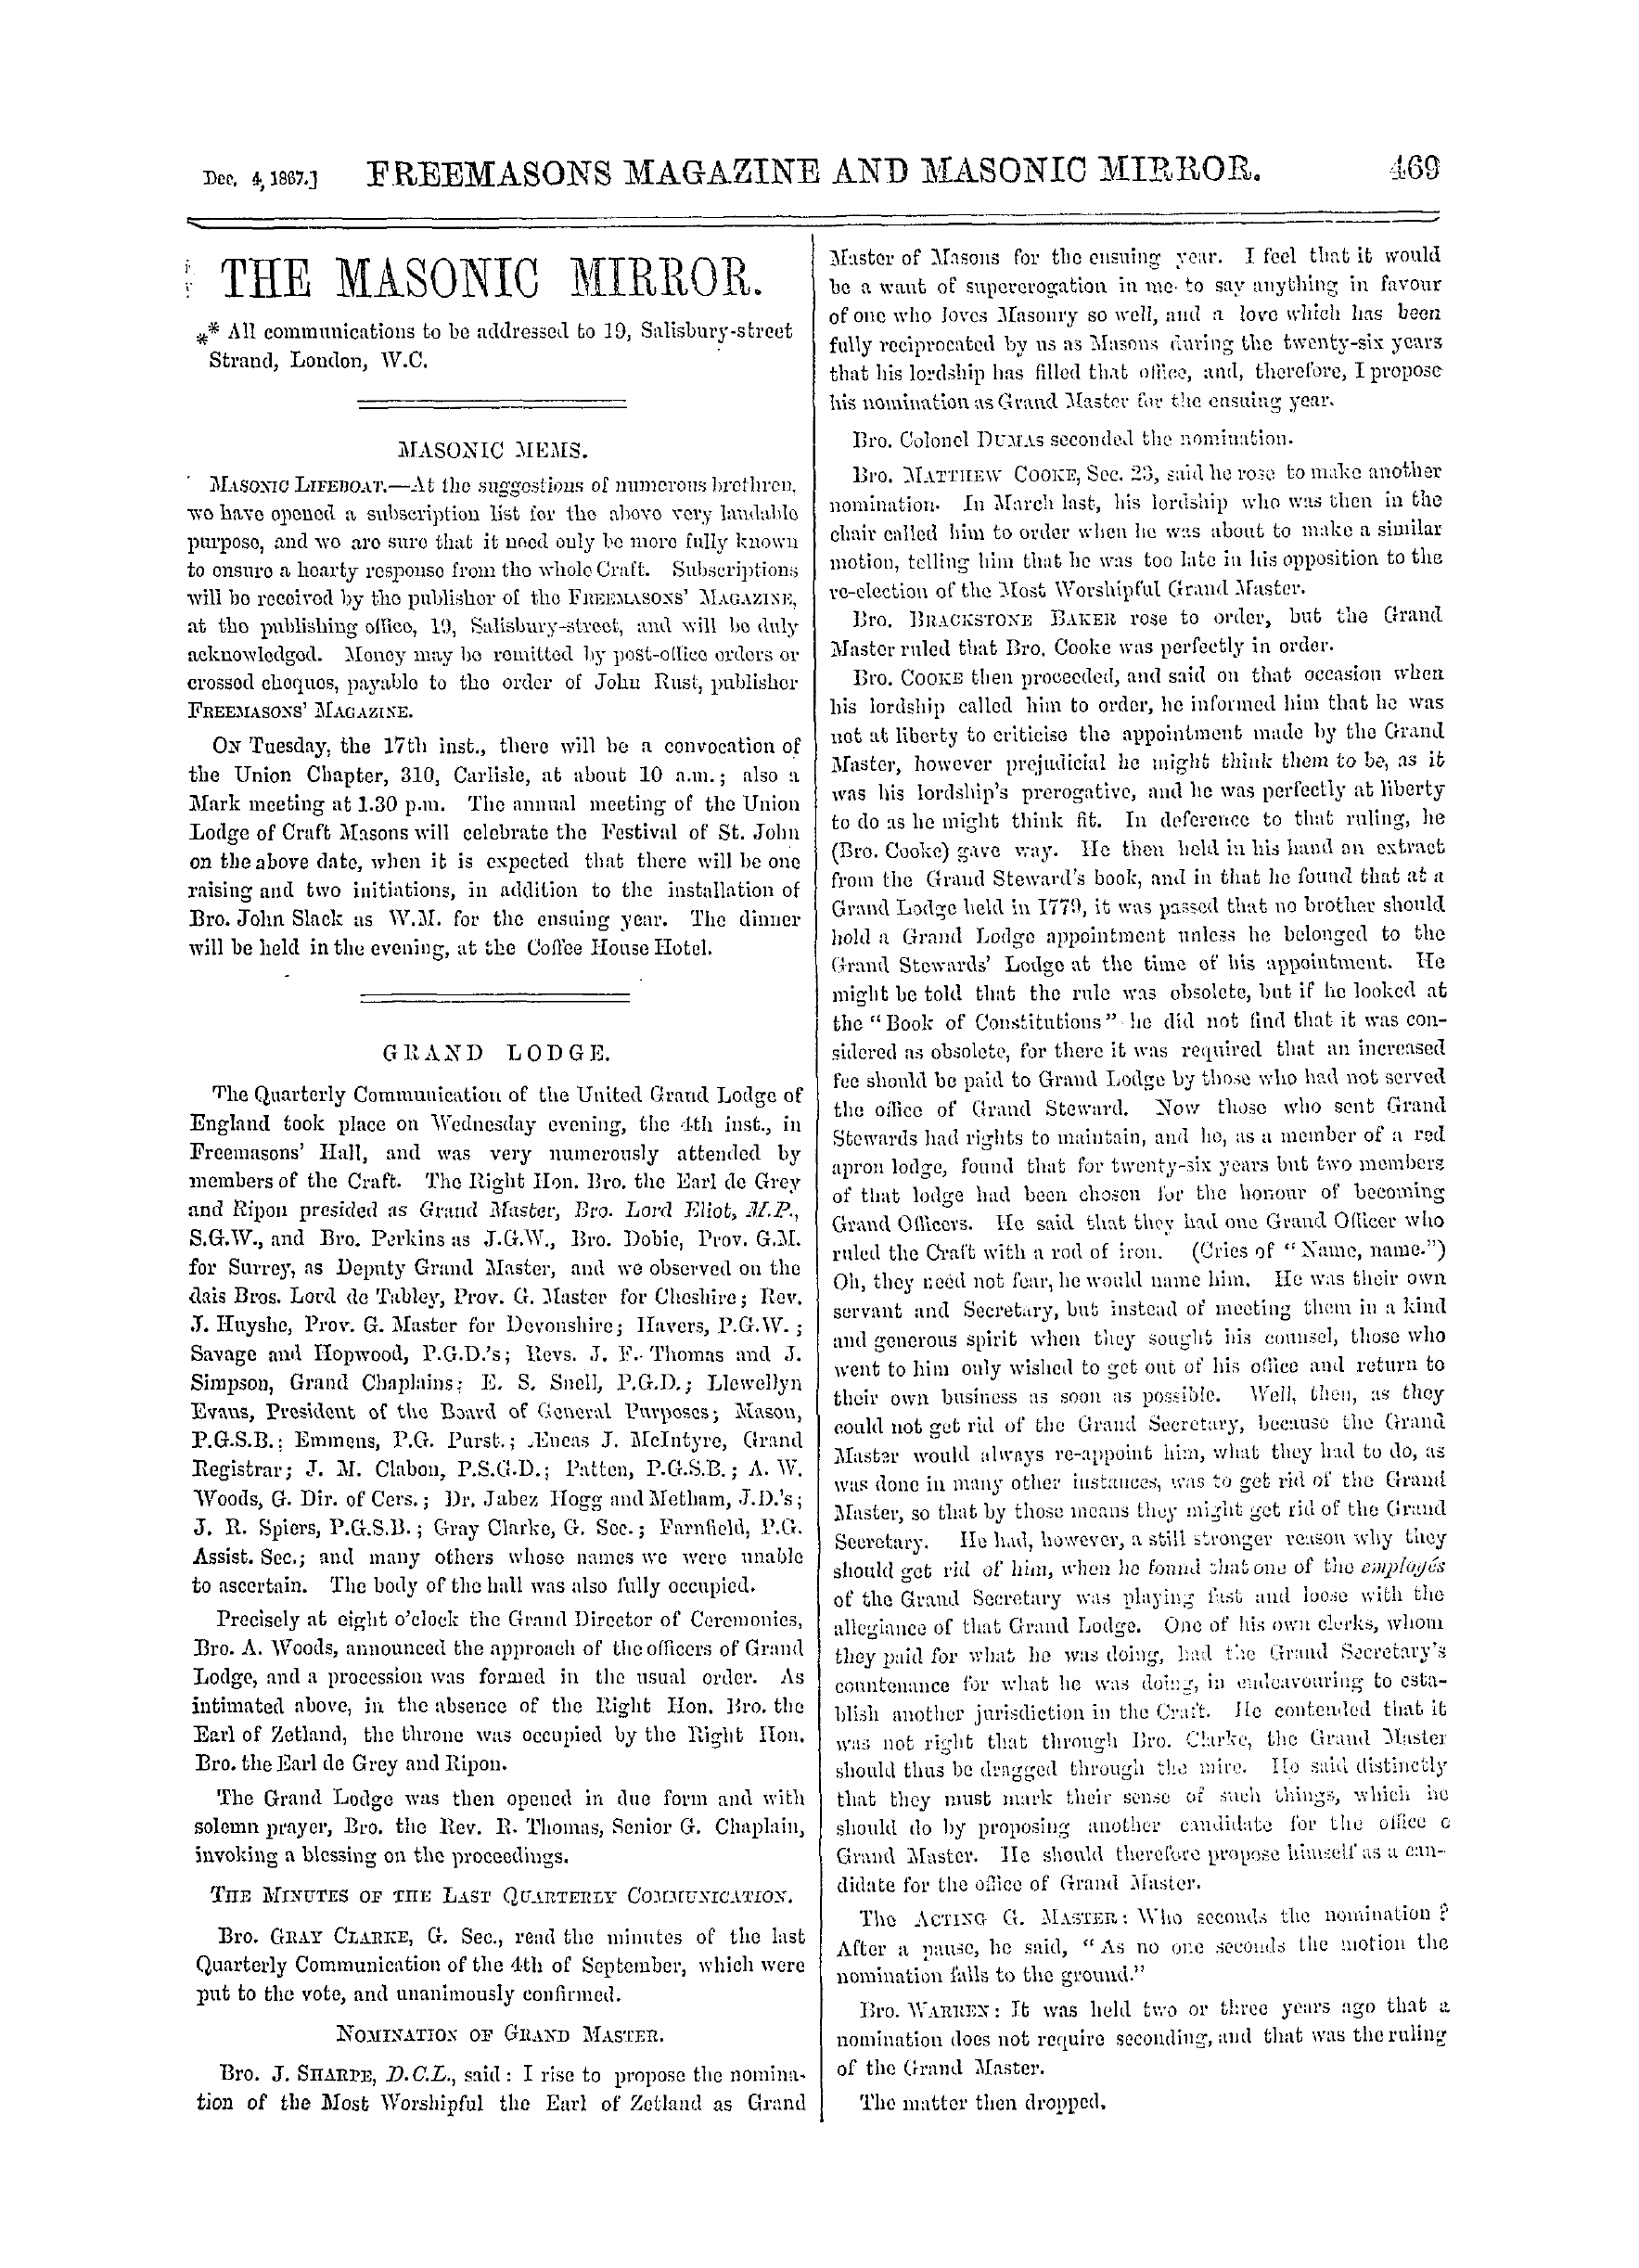 The Freemasons' Monthly Magazine: 1867-12-14 - Grand Lodge.